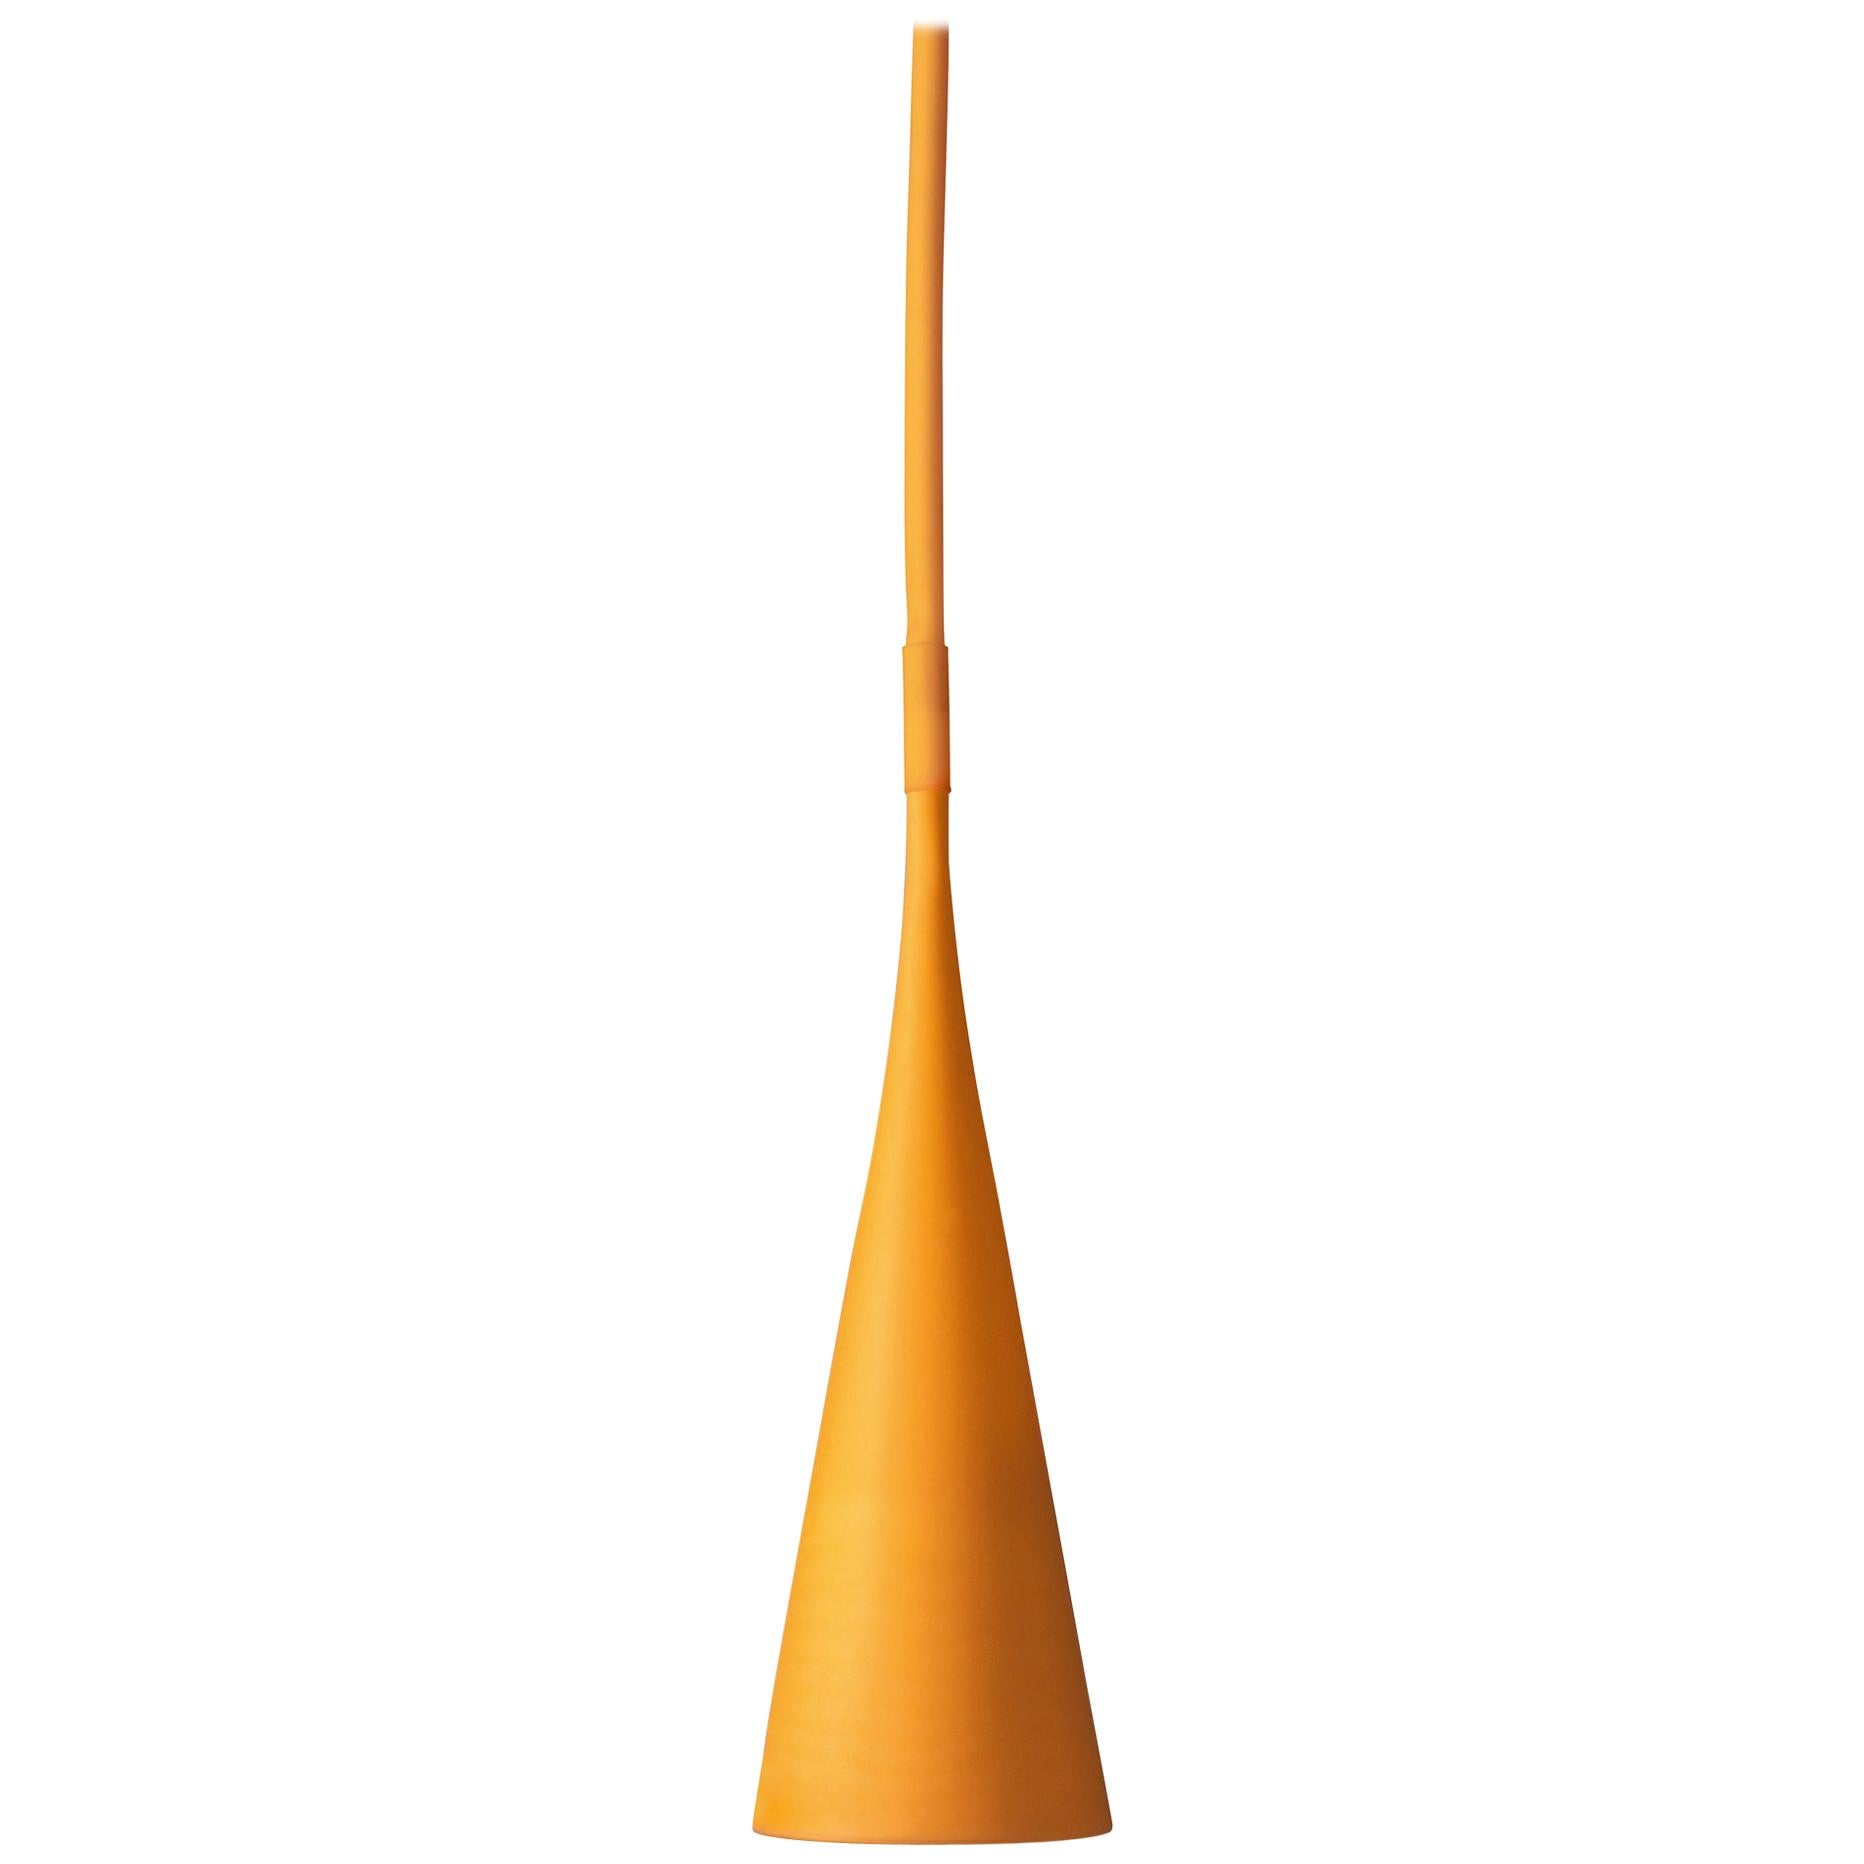 Foscarini UTO Suspension/Table Lamp in Orange by Lagranja Design For Sale